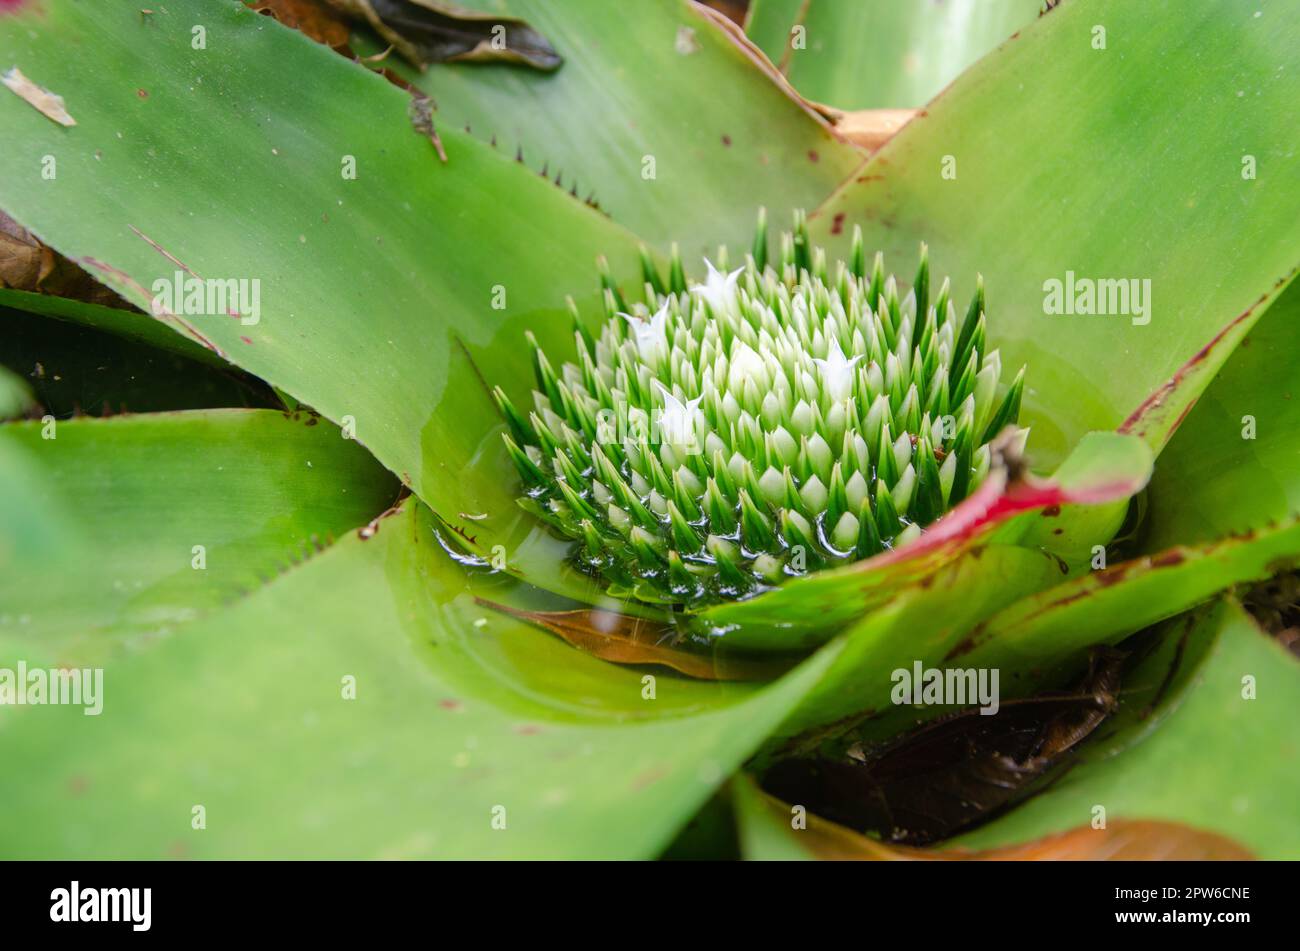 Large Marmorata Bromeliad Plant (bromelia quesnelia), Urban or Tropical plant, ornamental leaves grow upright like tentacles, with morning sap on its Stock Photo